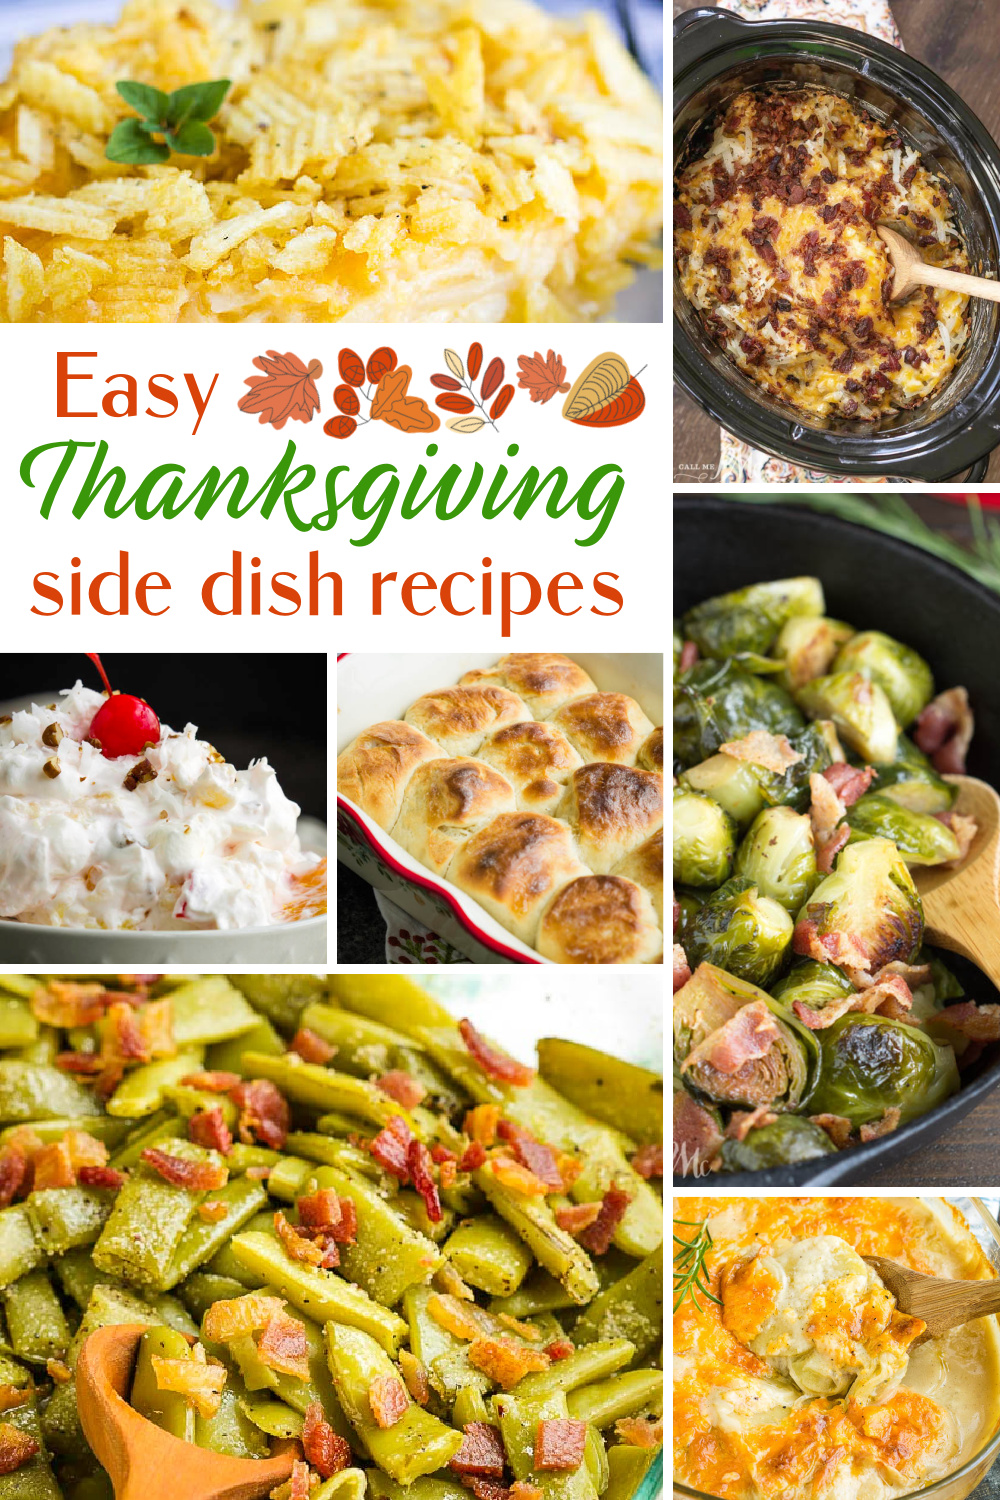 https://www.callmepmc.com/wp-content/uploads/2020/11/Easy-Thanksgiving-side-dishes.jpg